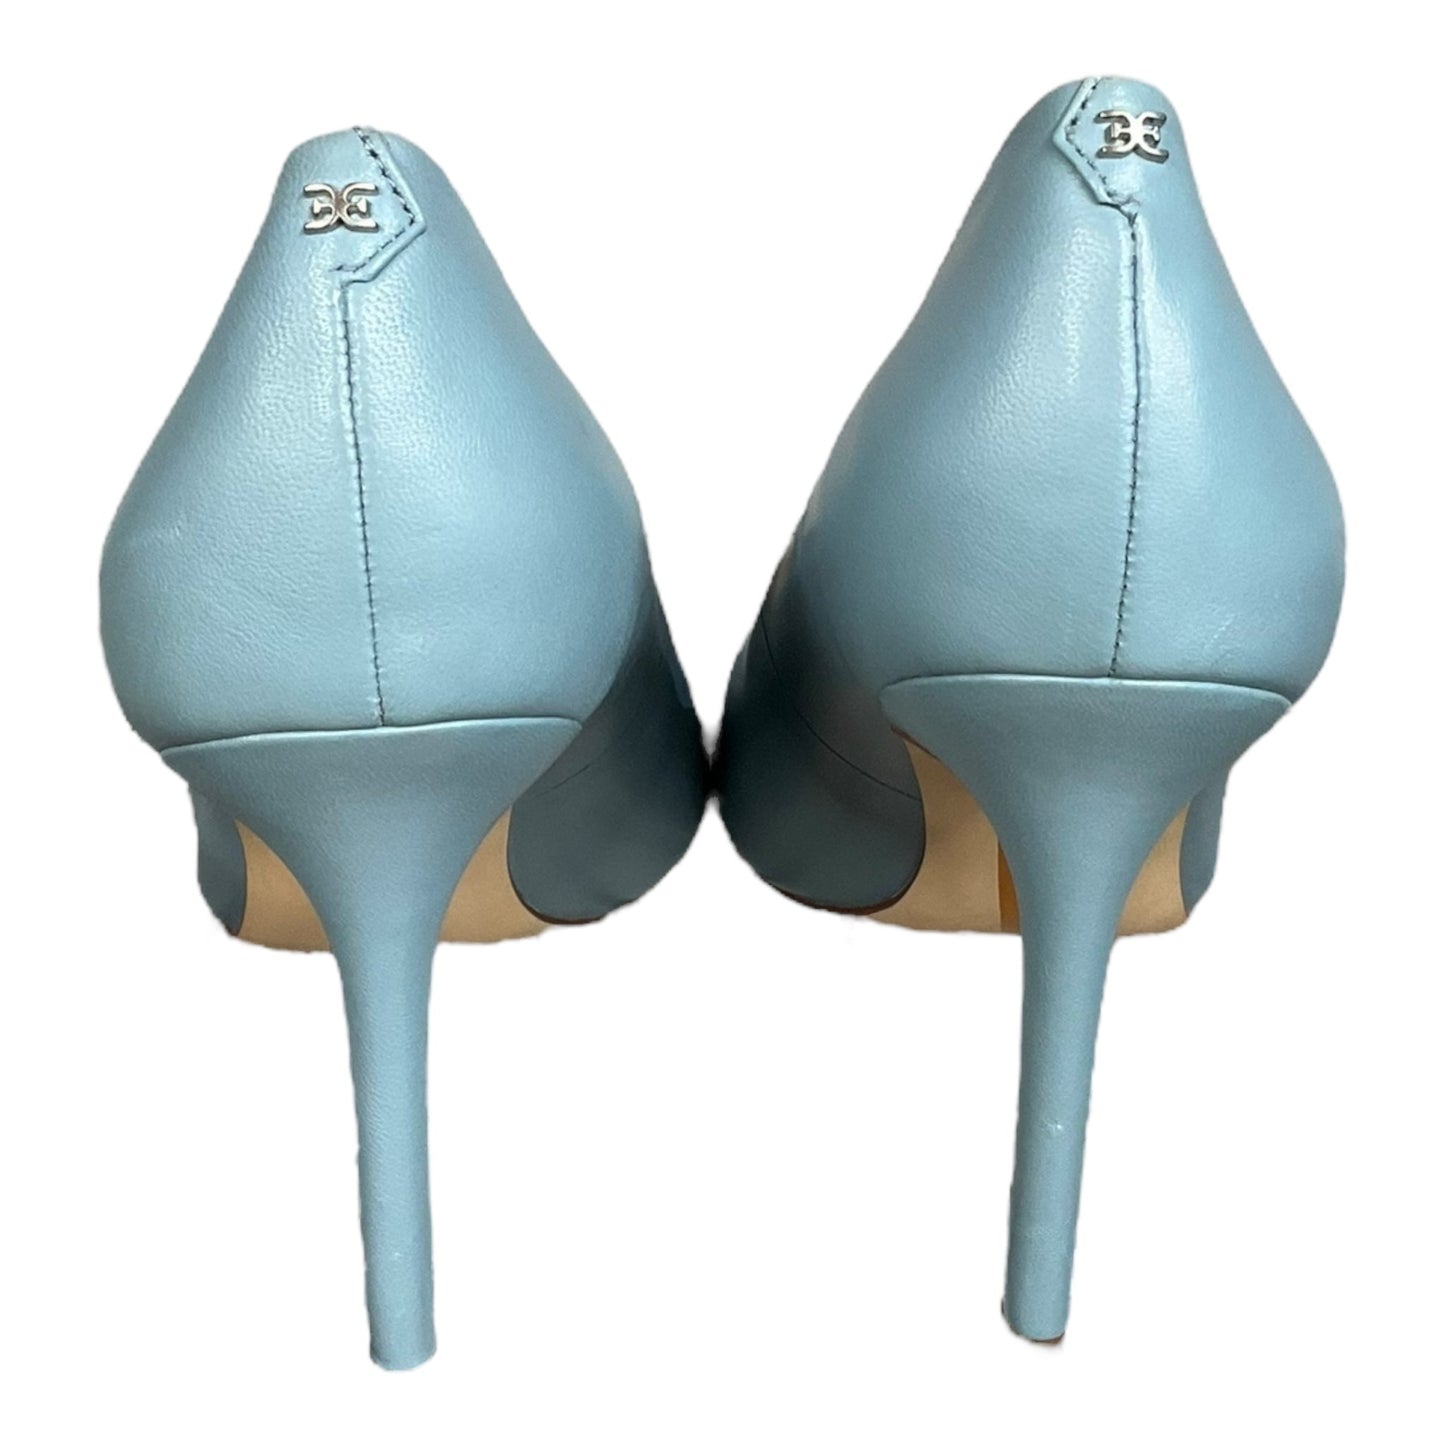 Blue Shoes Heels Stiletto Sam Edelman, Size 10